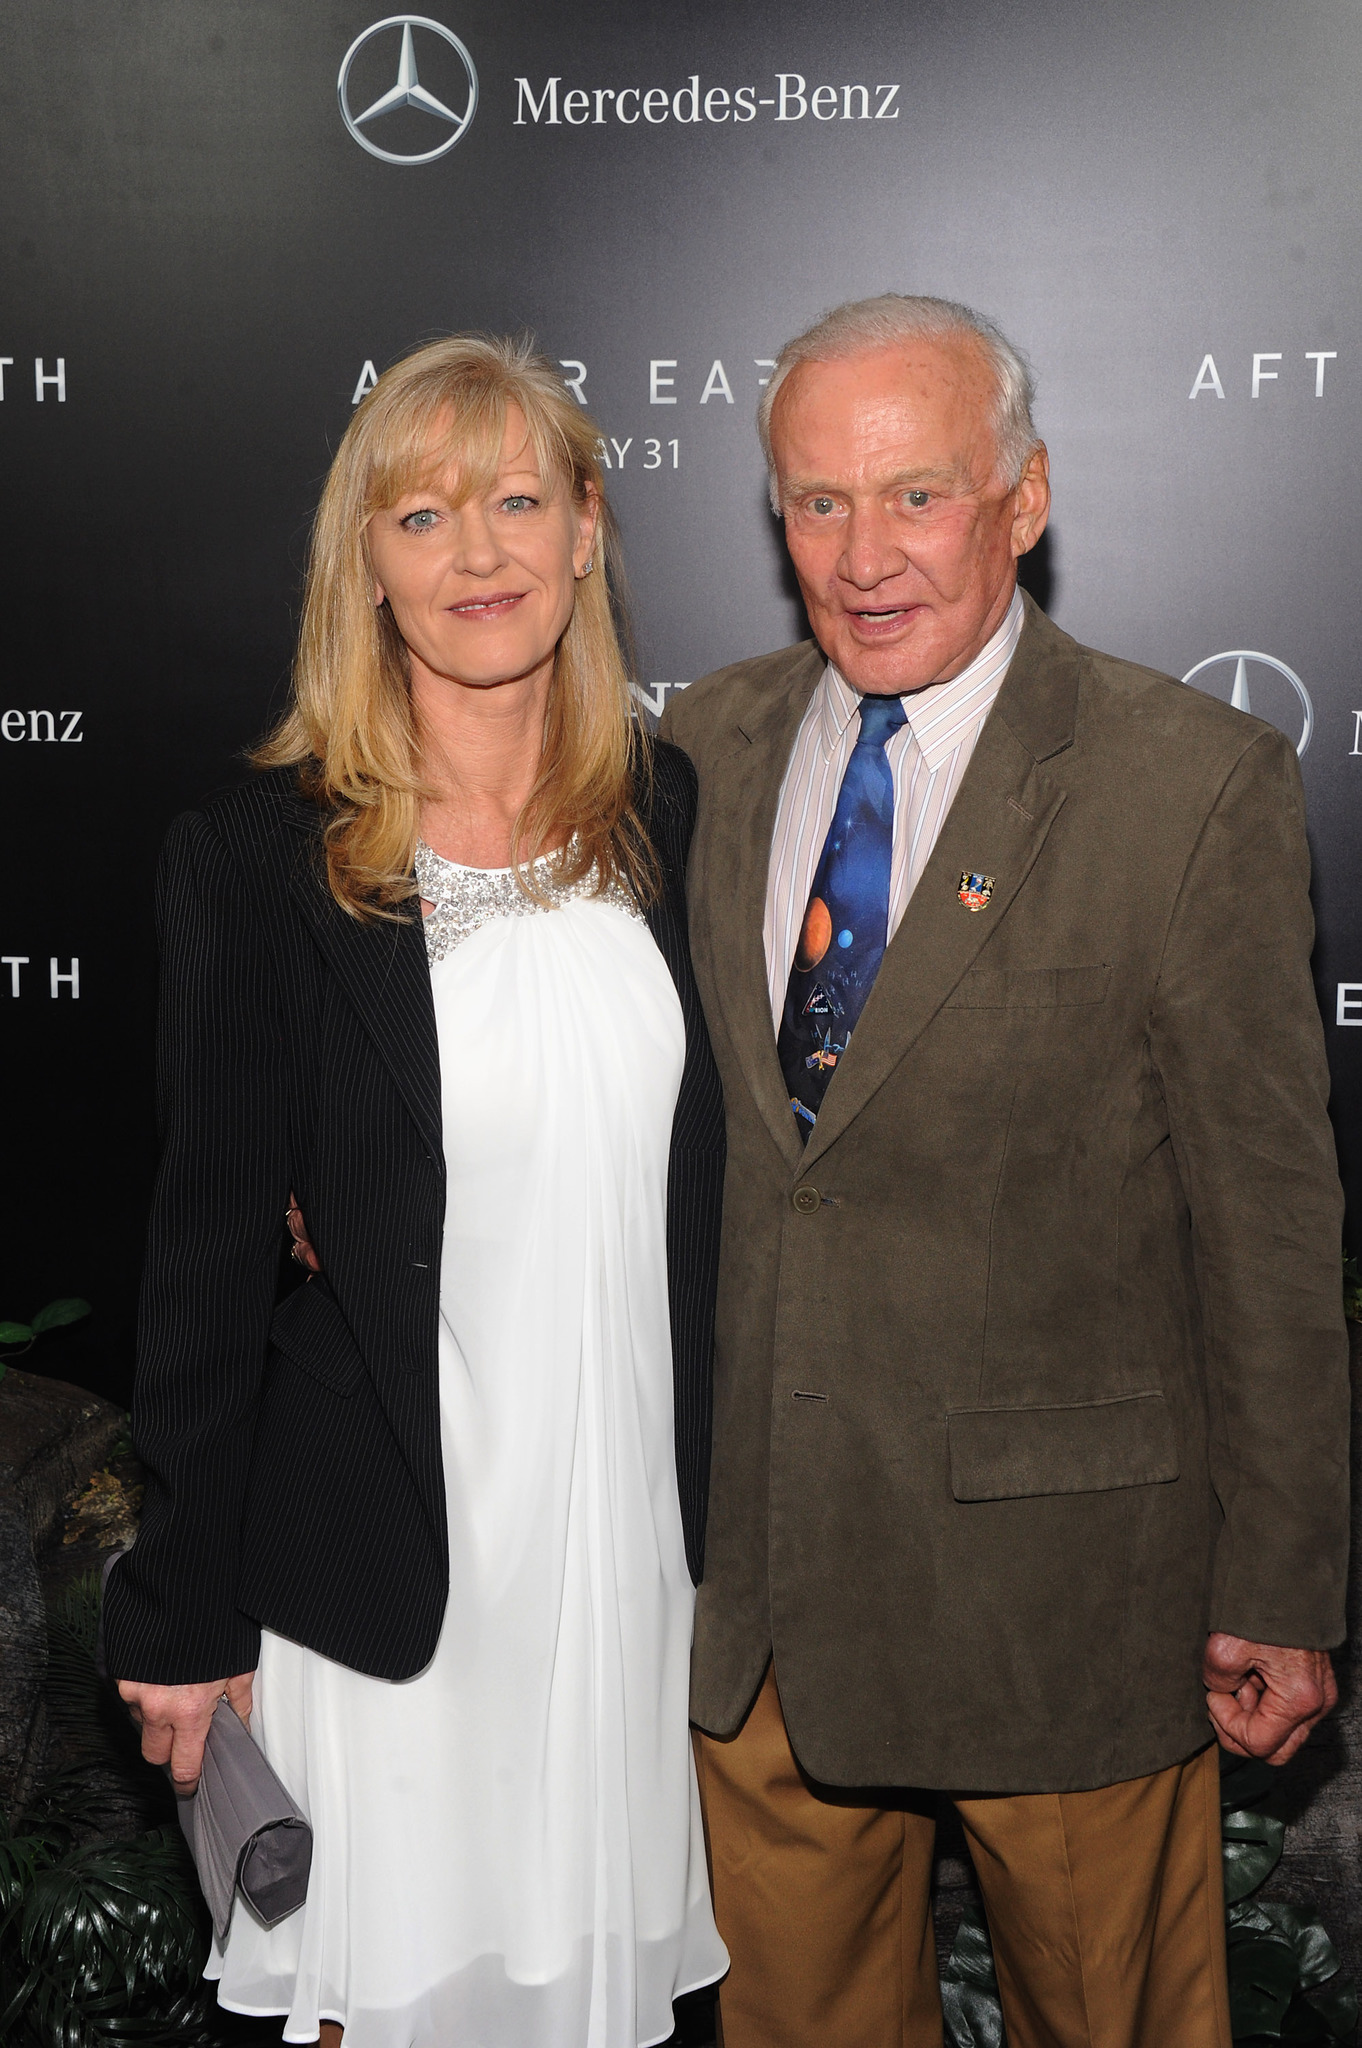 Buzz Aldrin at event of Zeme - nauja pradzia (2013)